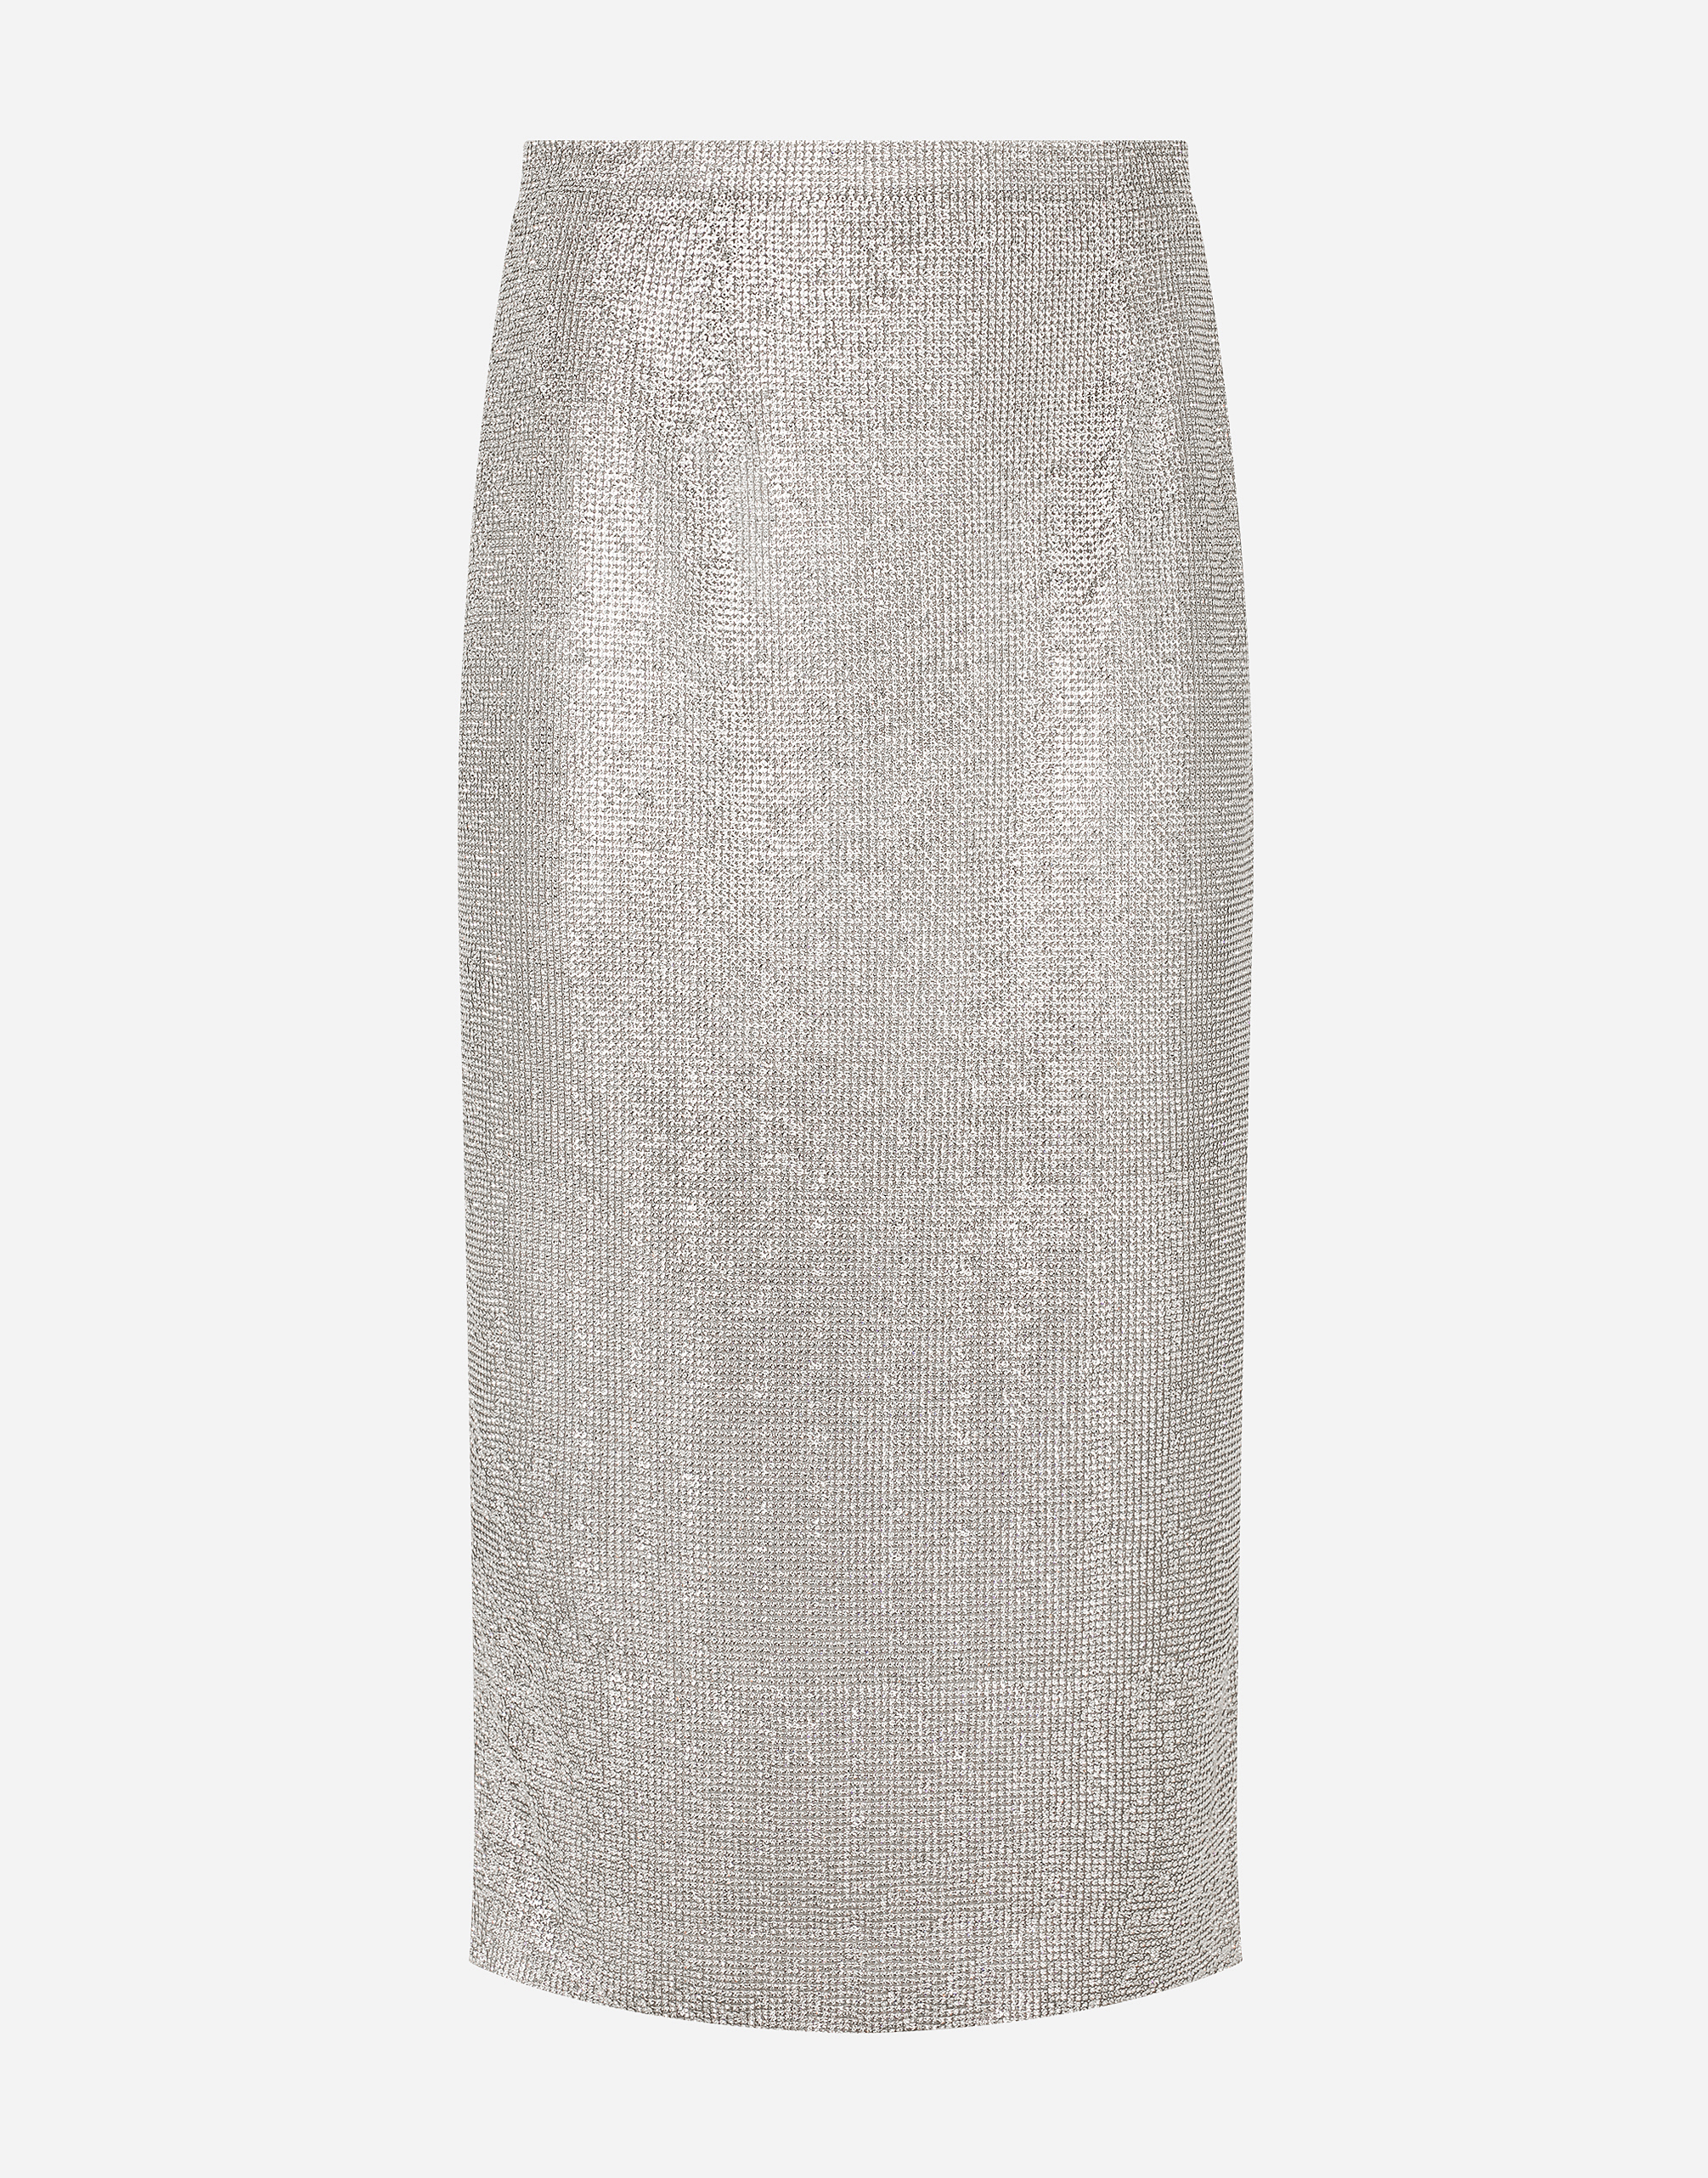 KIM DOLCE&GABBANA Calf-length crystal mesh pencil skirt in Multicolor